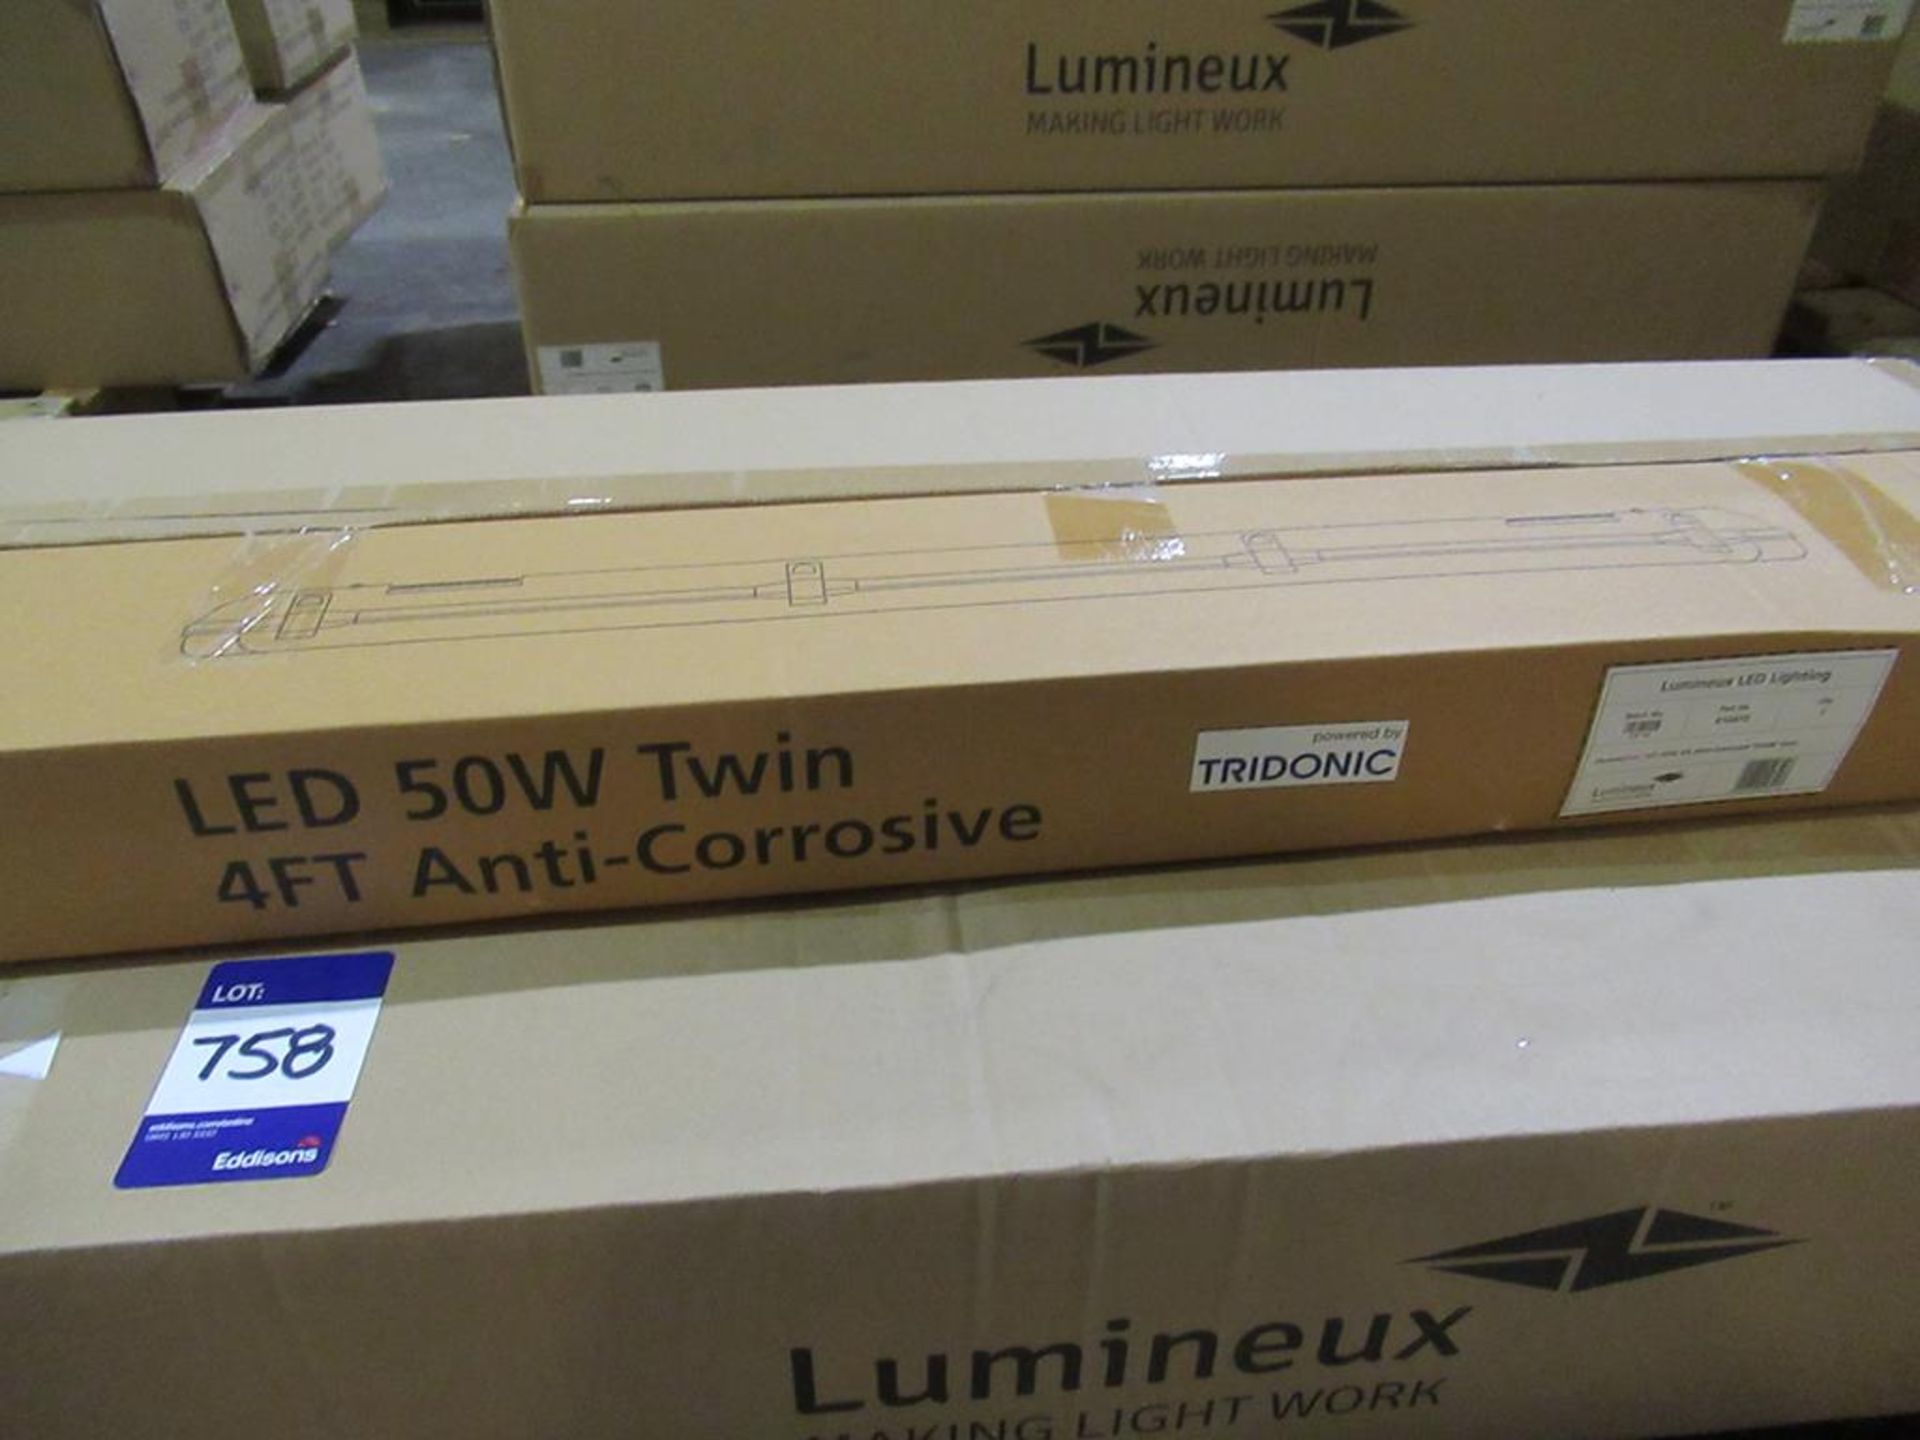 8 x Lumineux LED 50W 4ft Anti-Corrosive 5000K Twin OEM Trade Price £496 - Image 3 of 6